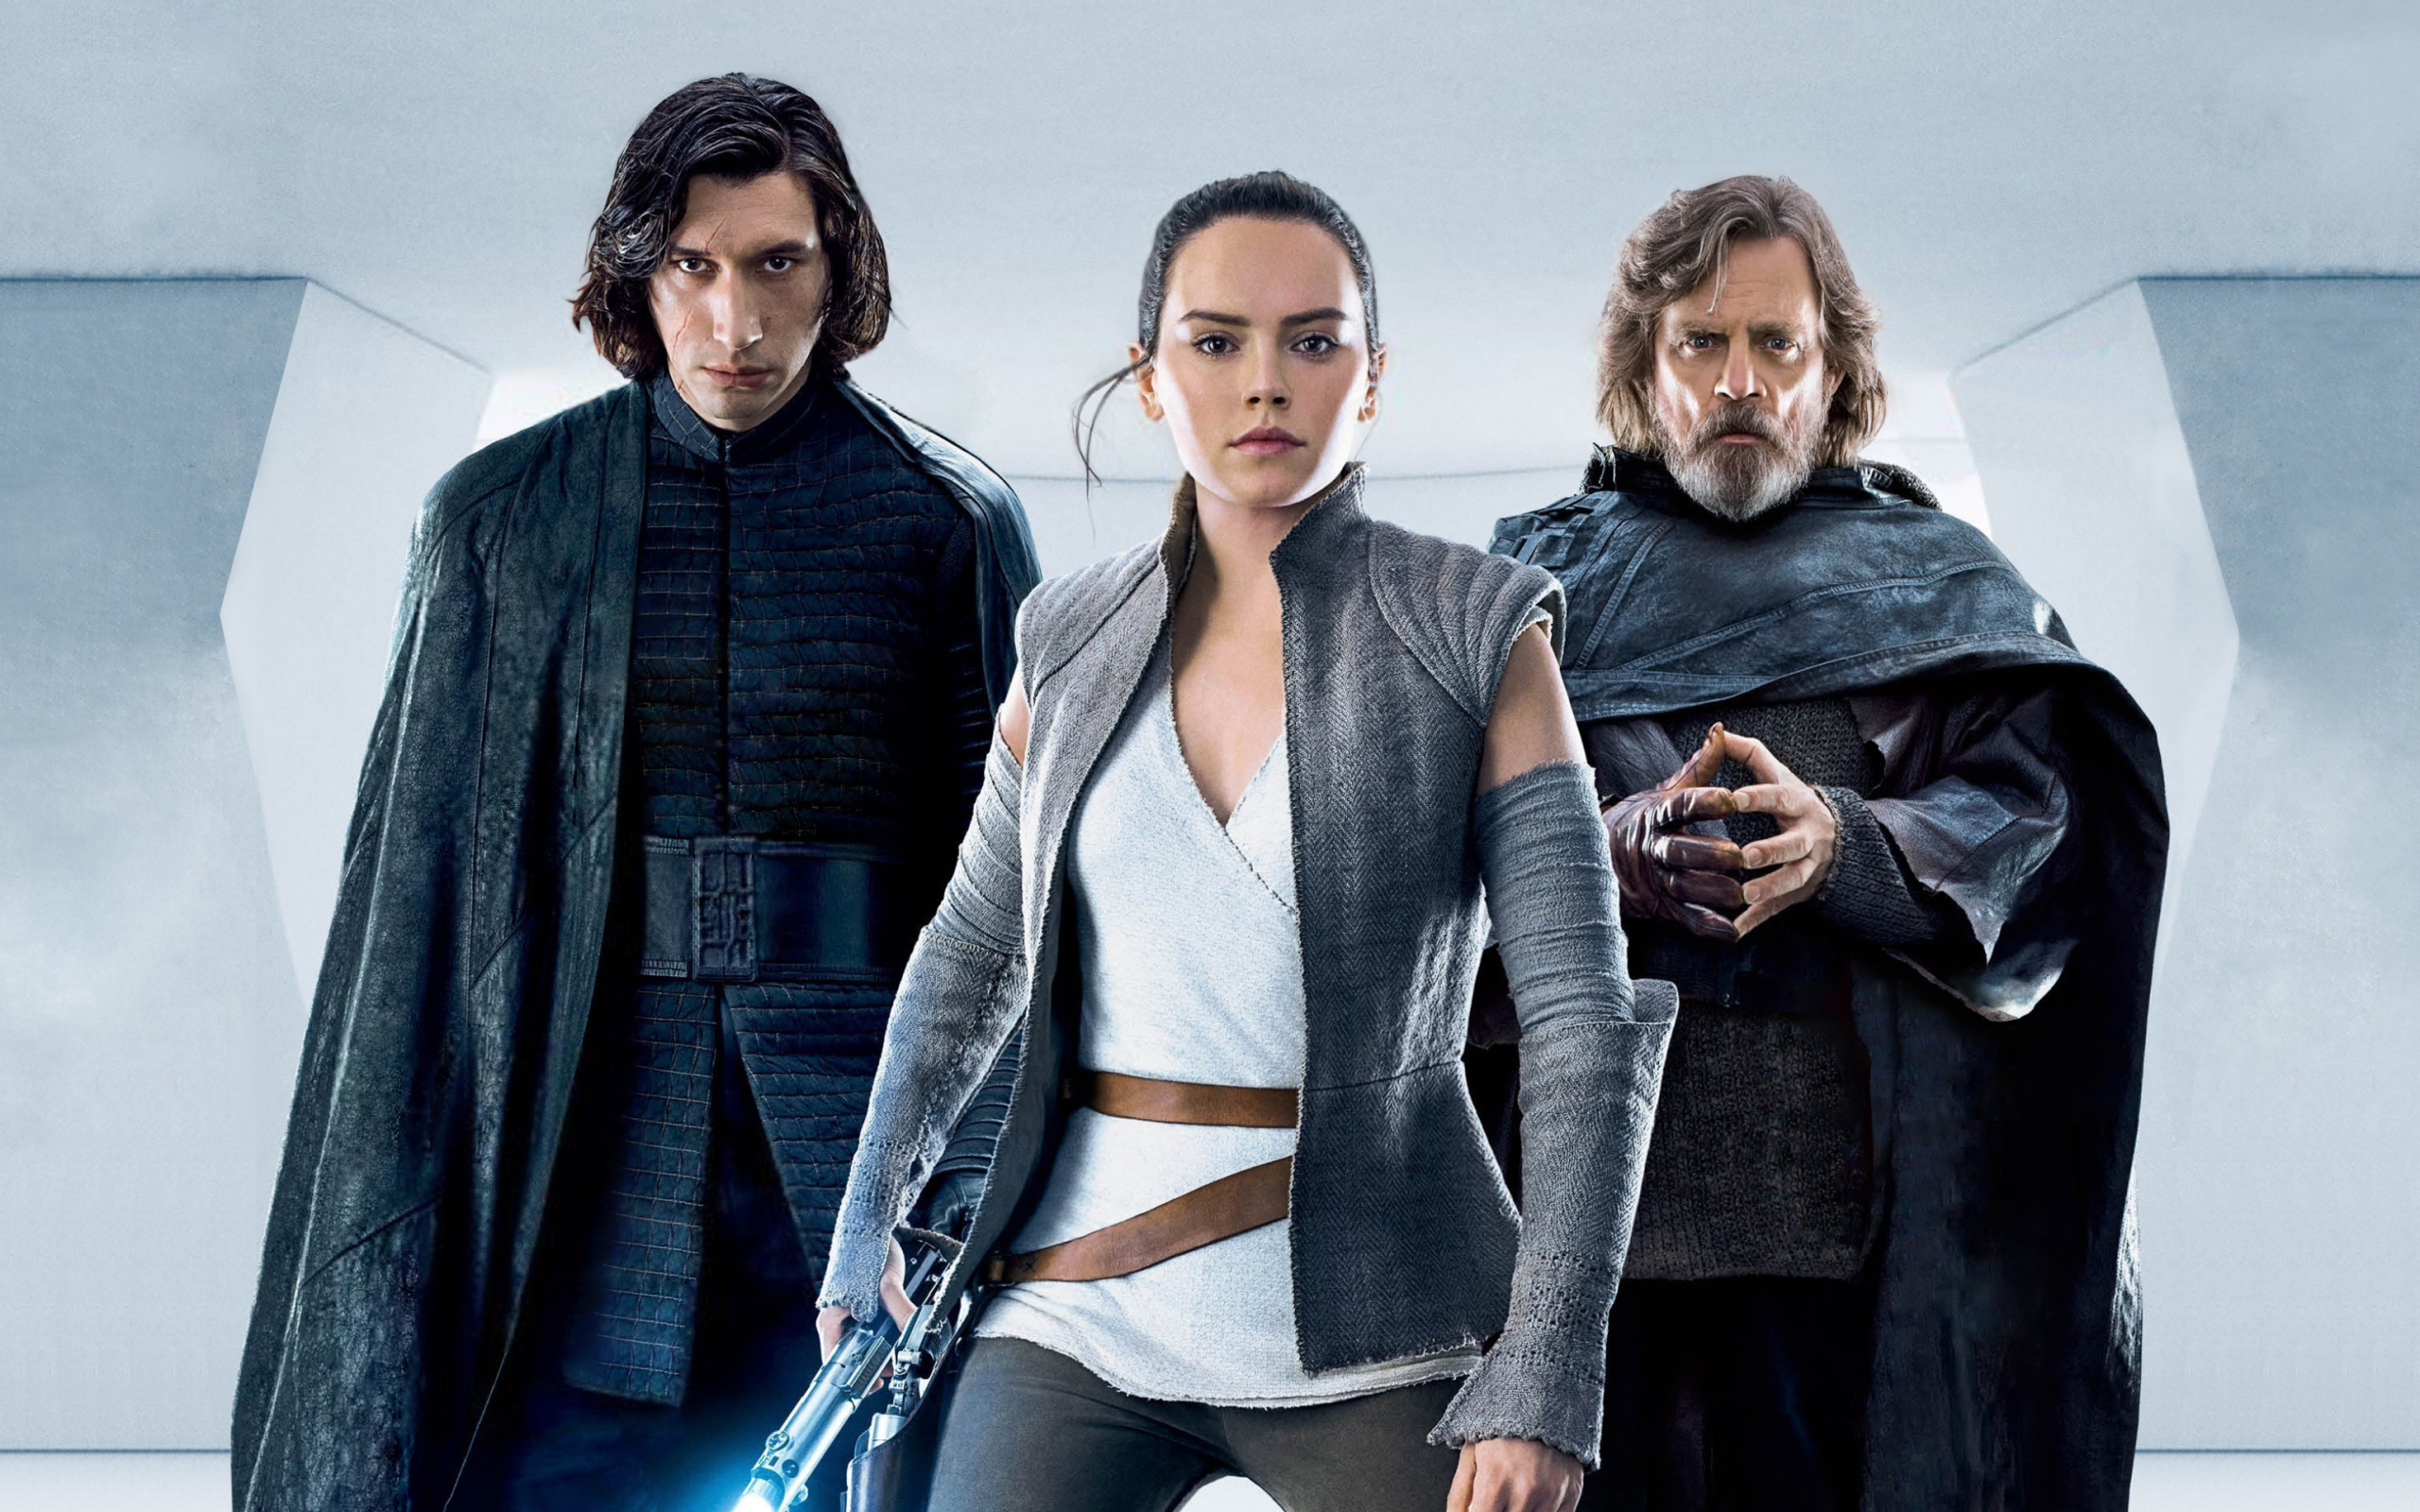 Das Star Wars The Last Jedi with Rey and Kylo Ren Shirtless Wallpaper 2560x1600